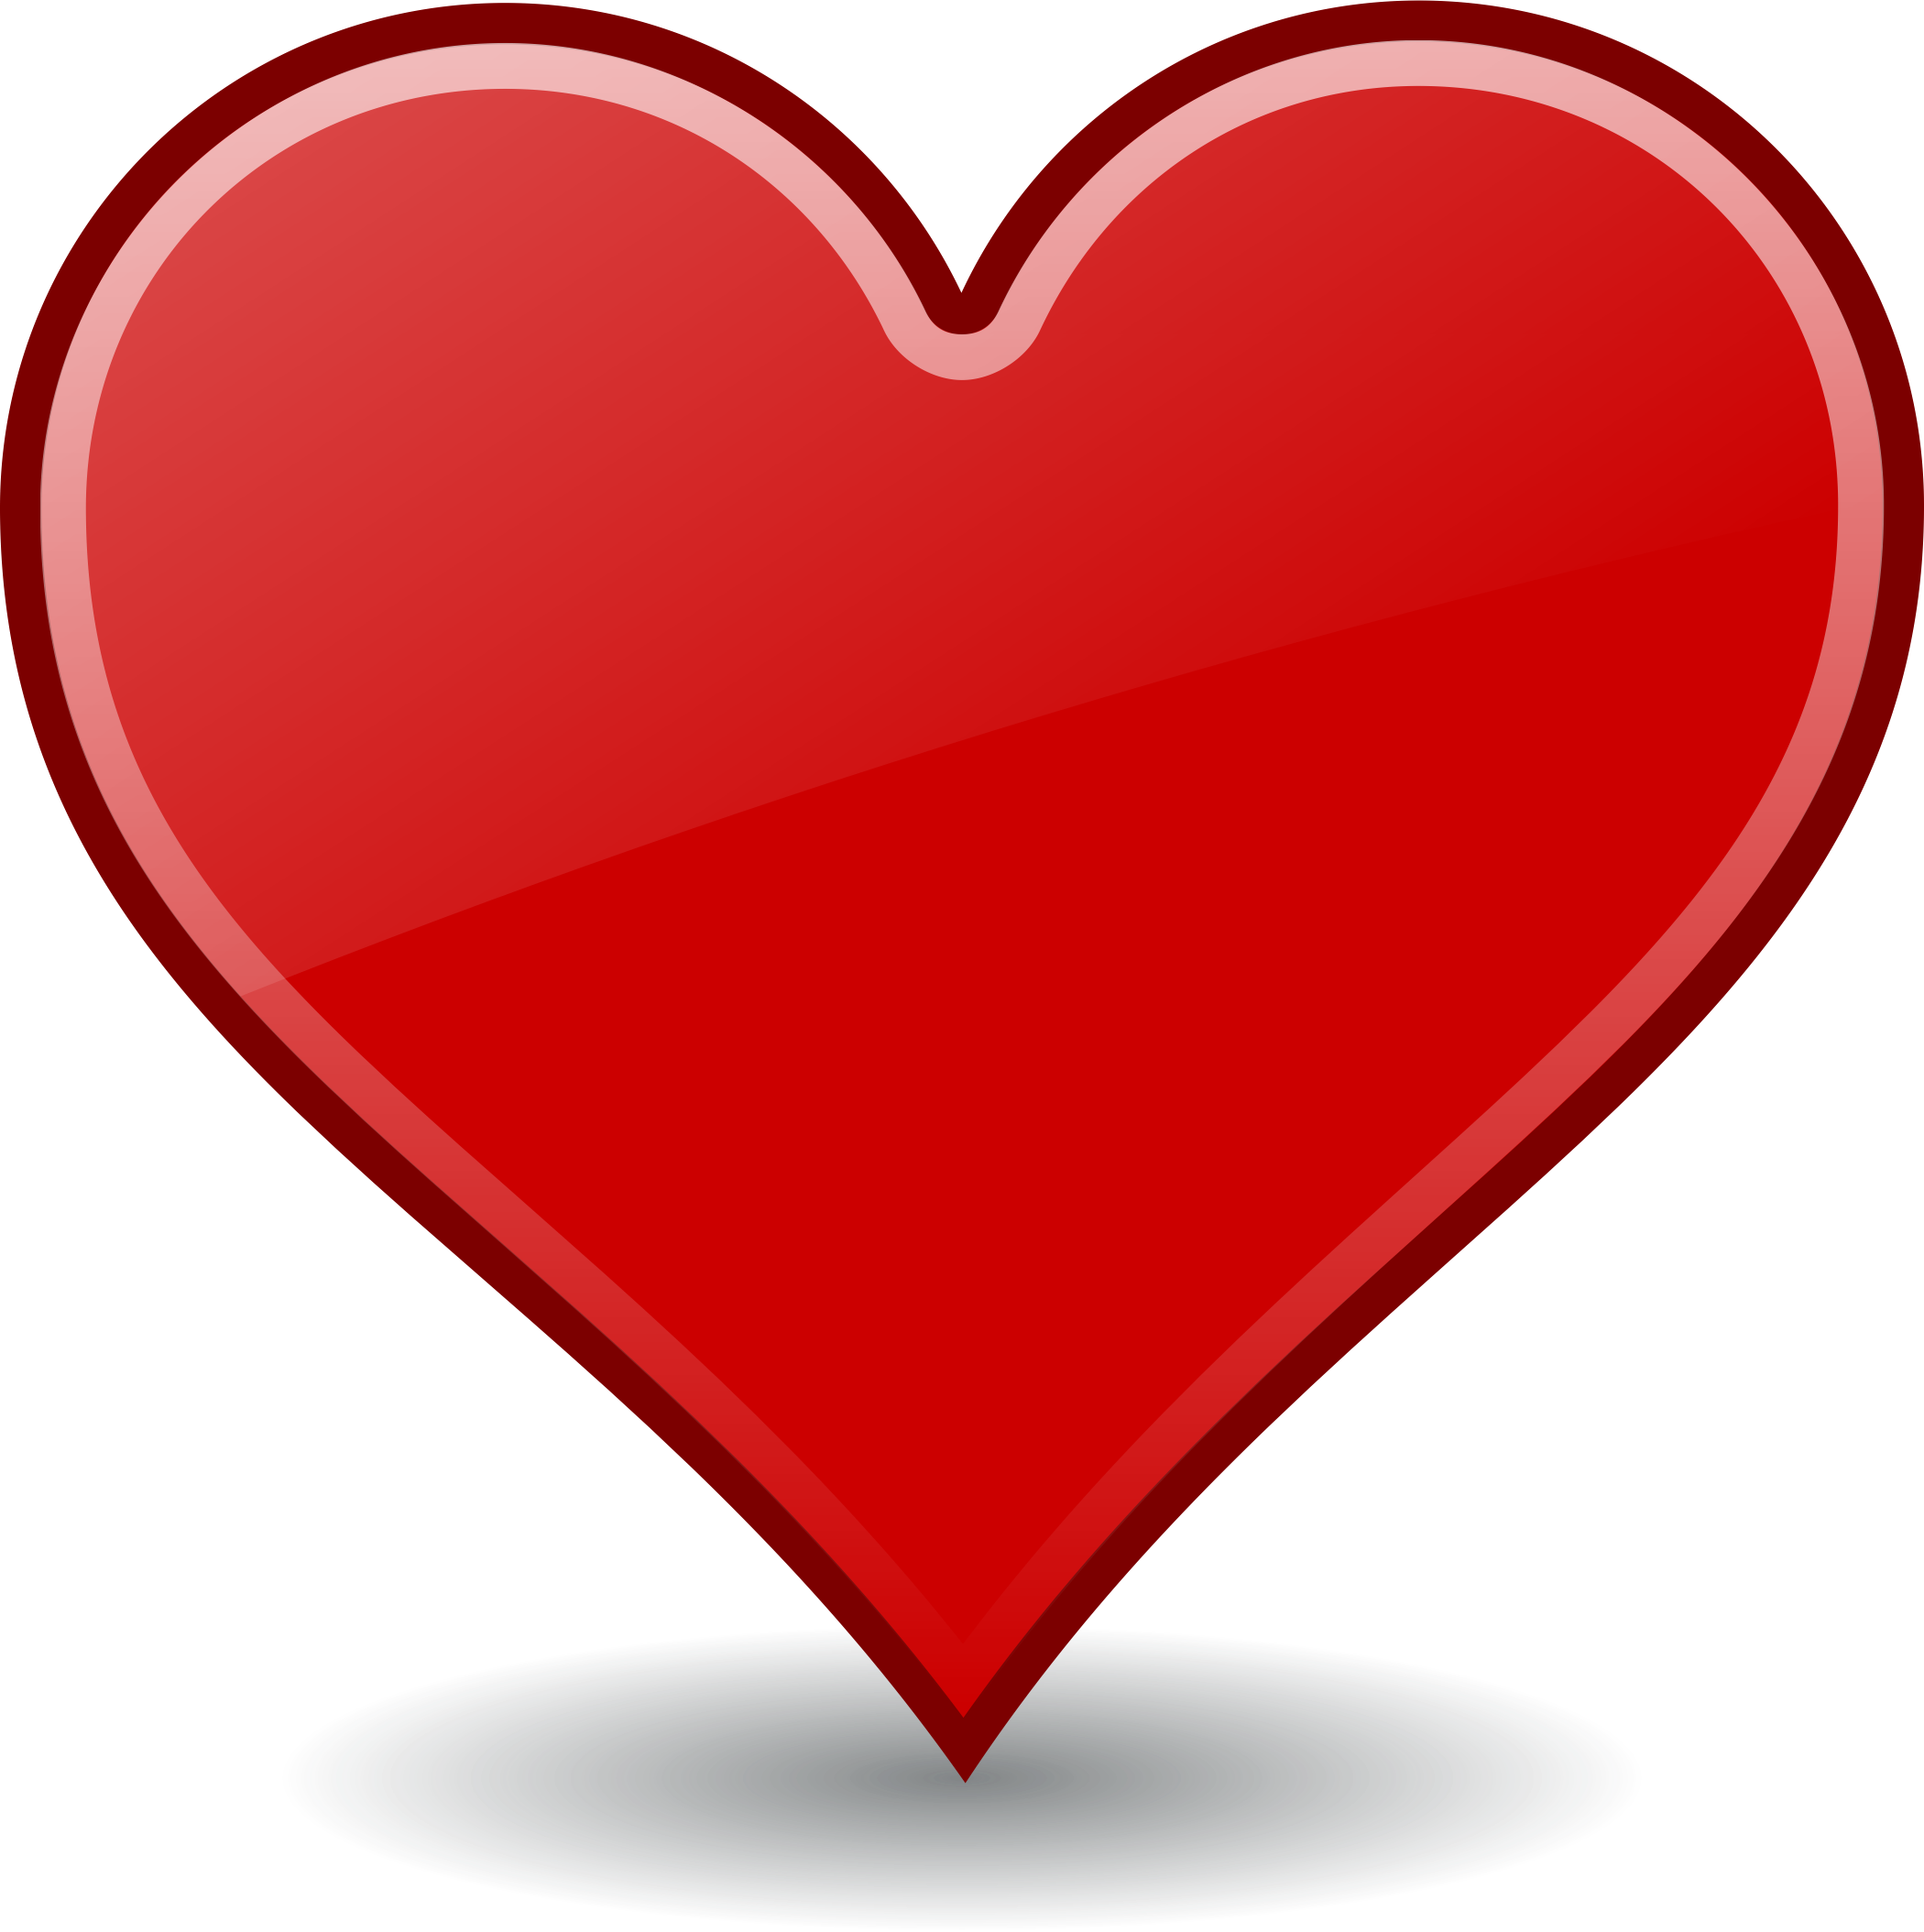 heart emoji clipart - photo #32